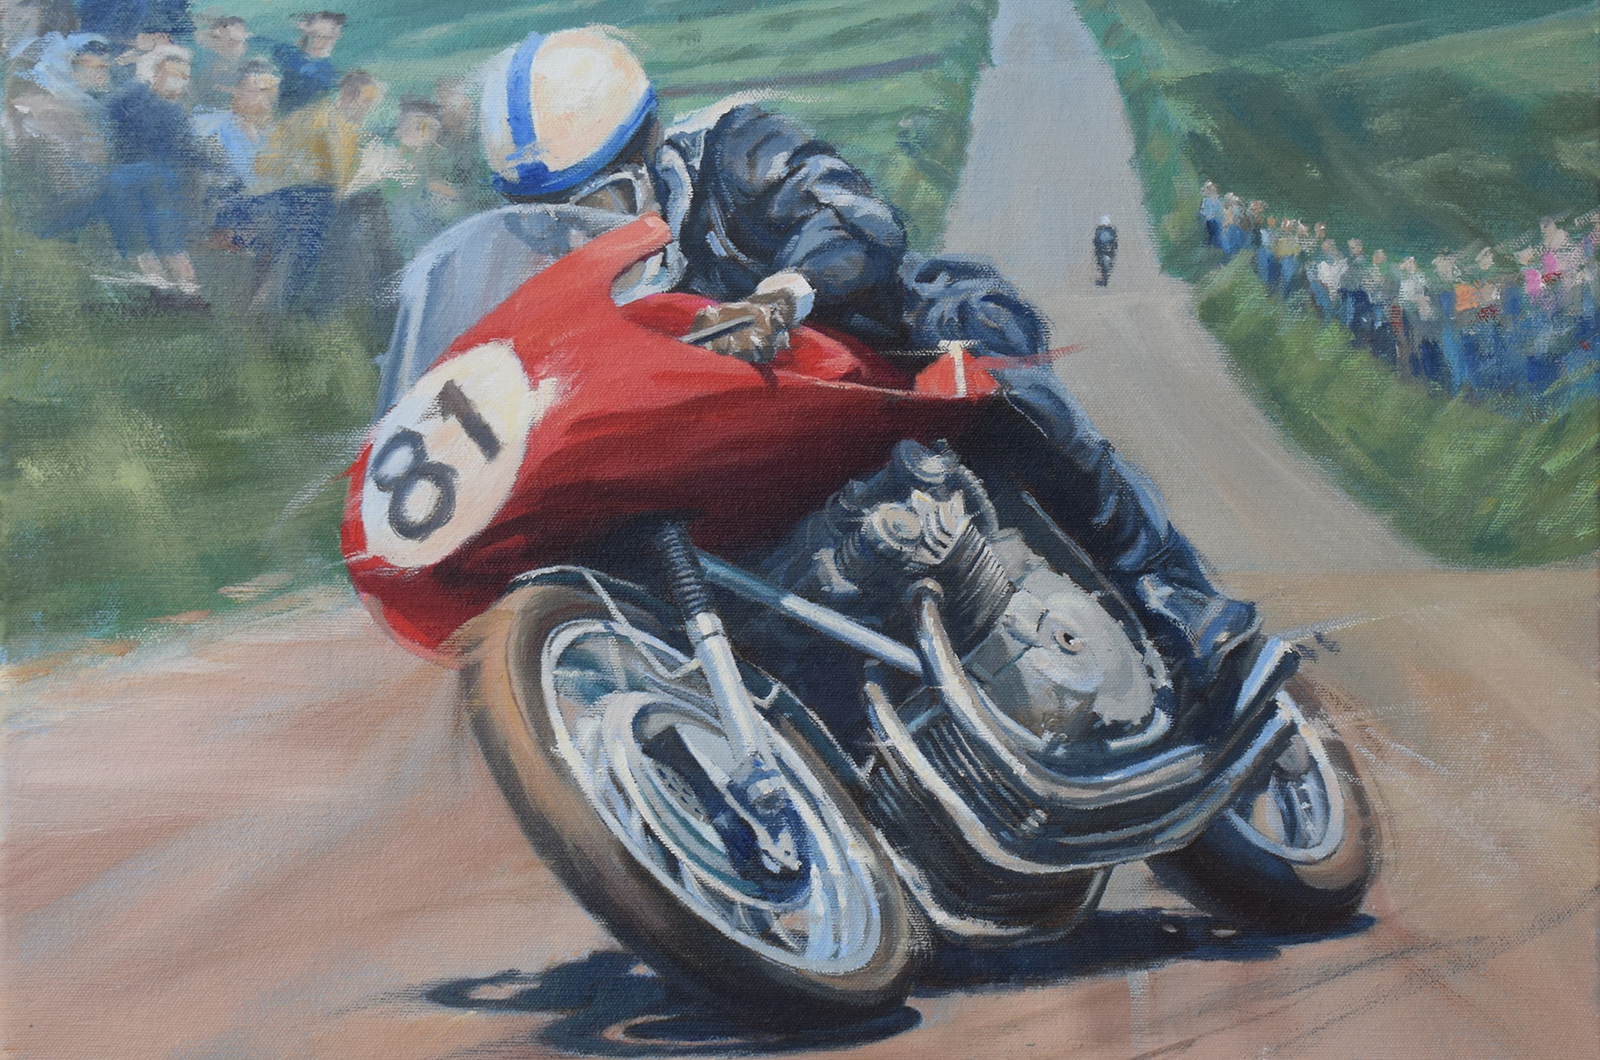 Classic & Sports Car – Motoring art: Stuart Booth